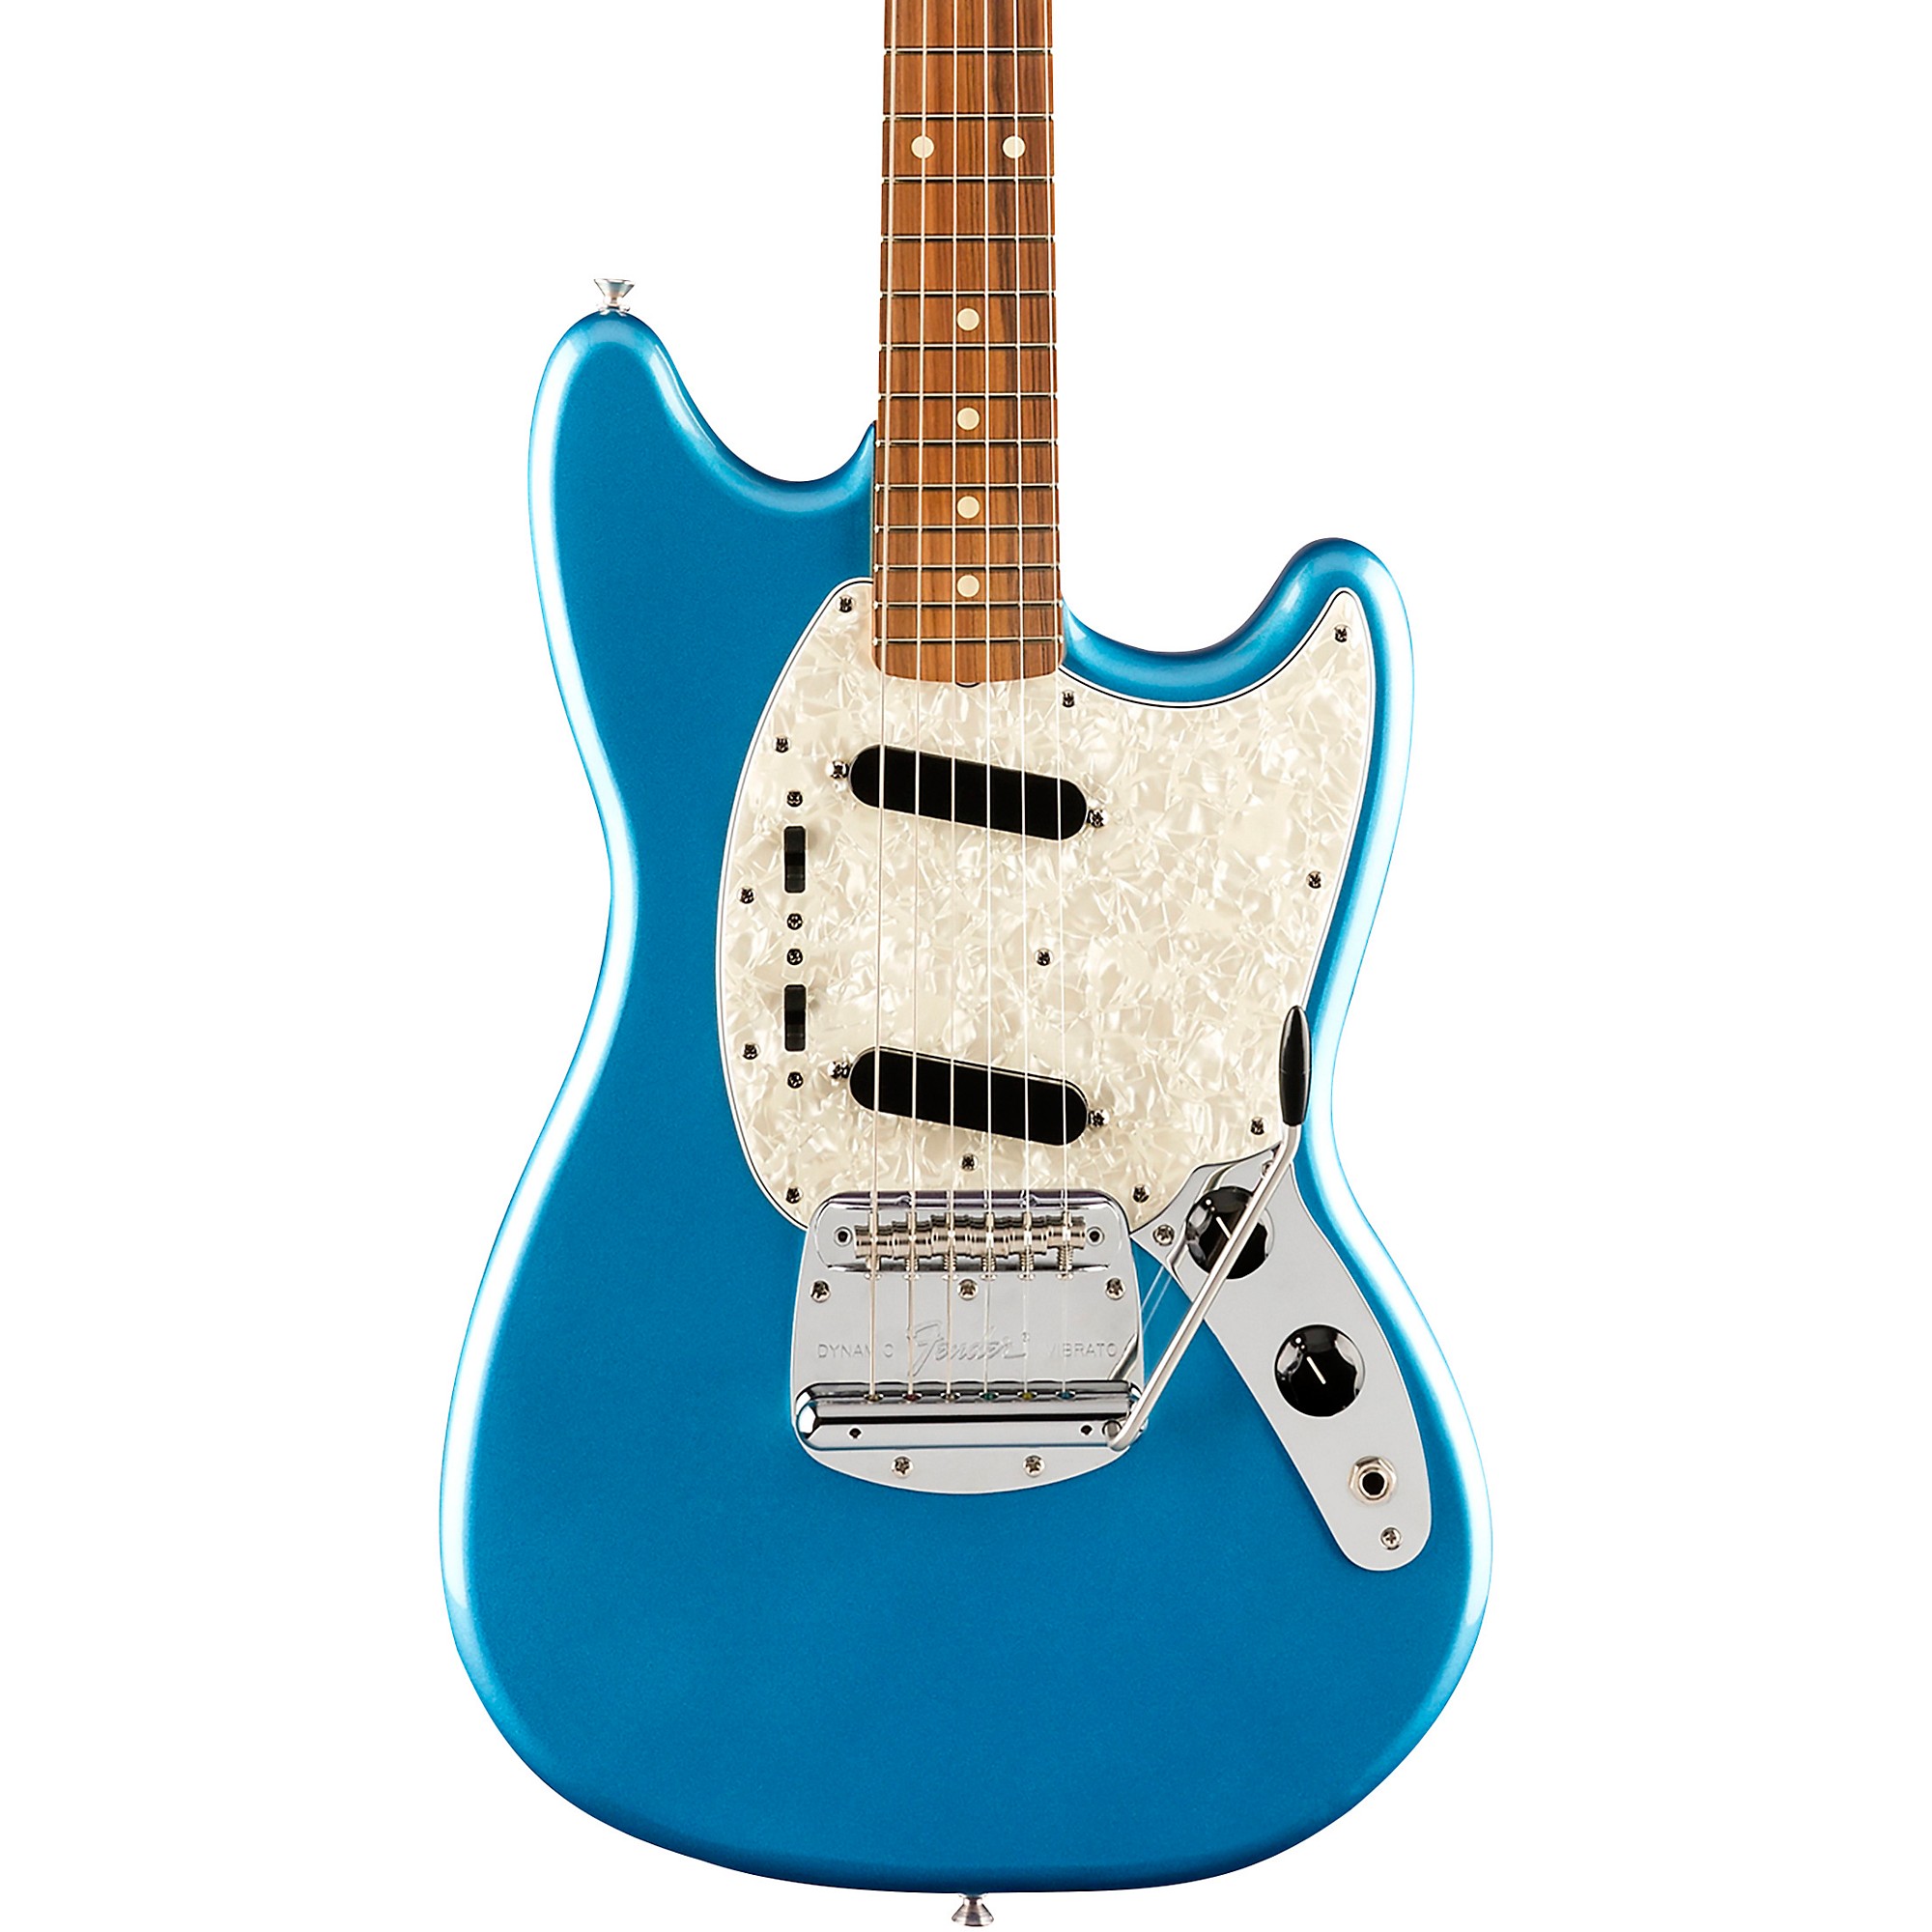 Гитара мустанг. Fender Mustang гитара. Электрогитара Фендер Мустанг. Гитара Fender Mustang голубая. Fender Mustang Lake Placid Blue.